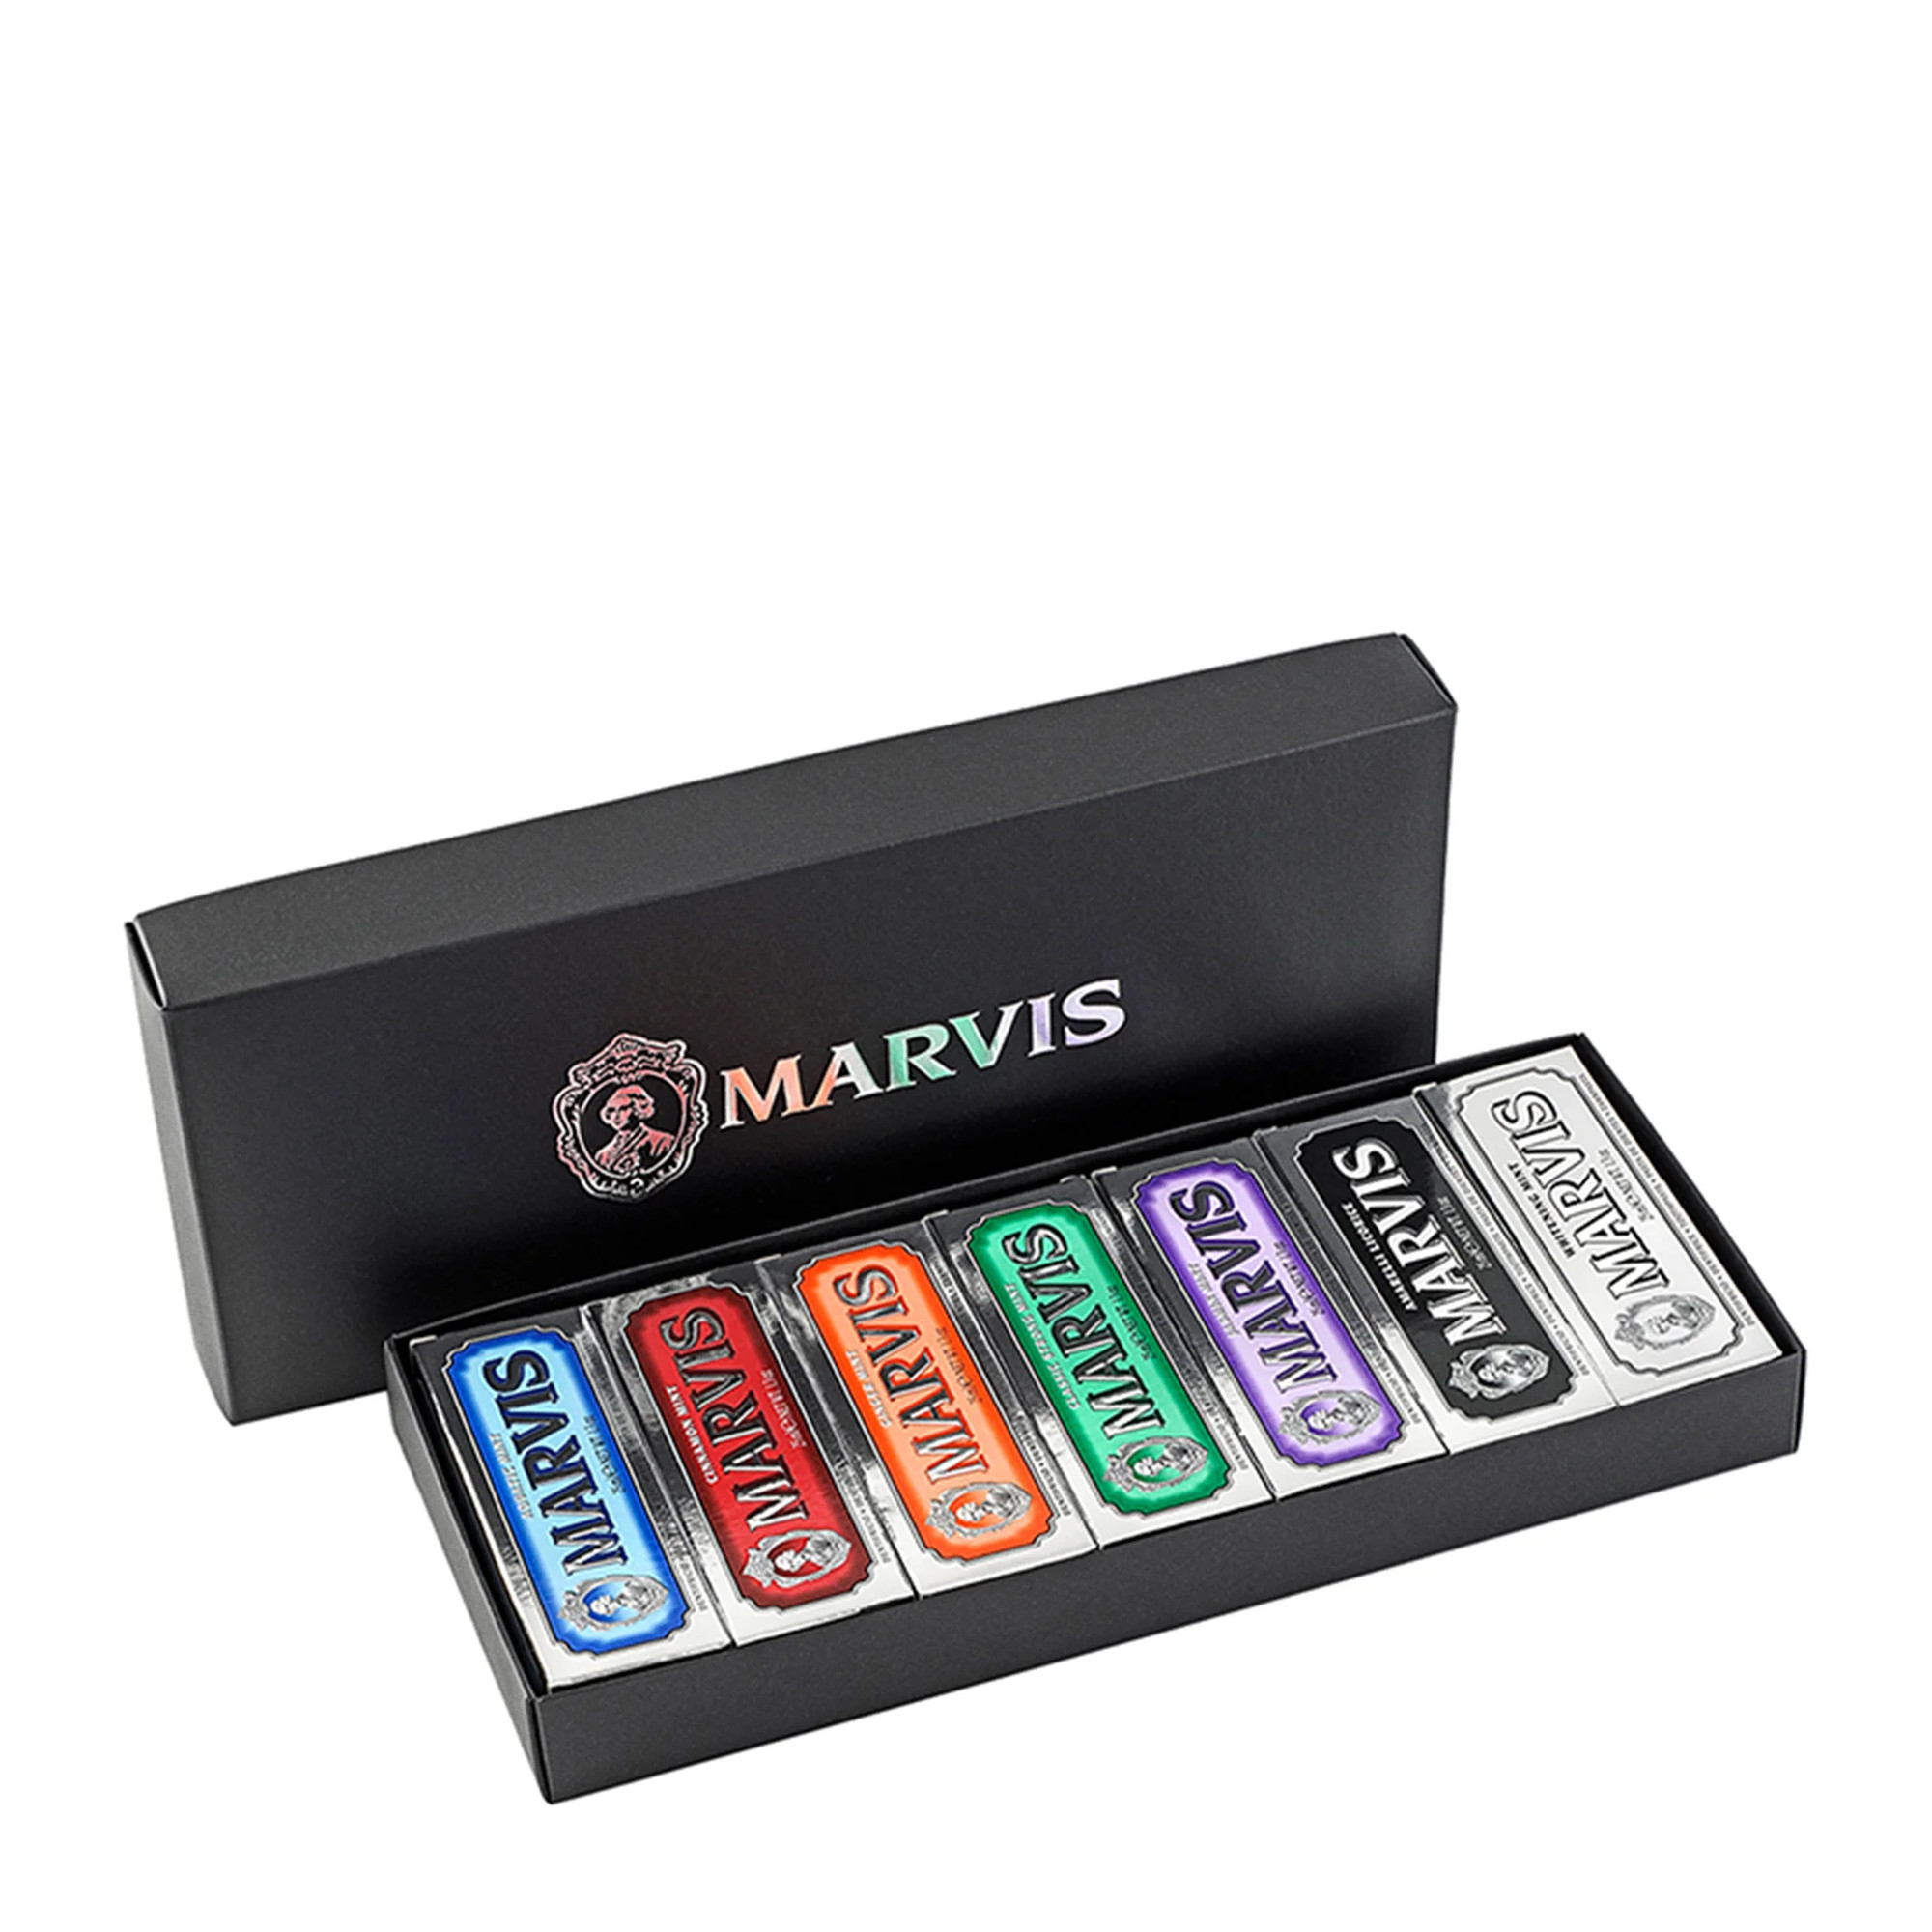 Marvis 7 Flavours Box - Набор из 7 видов паст в коробке